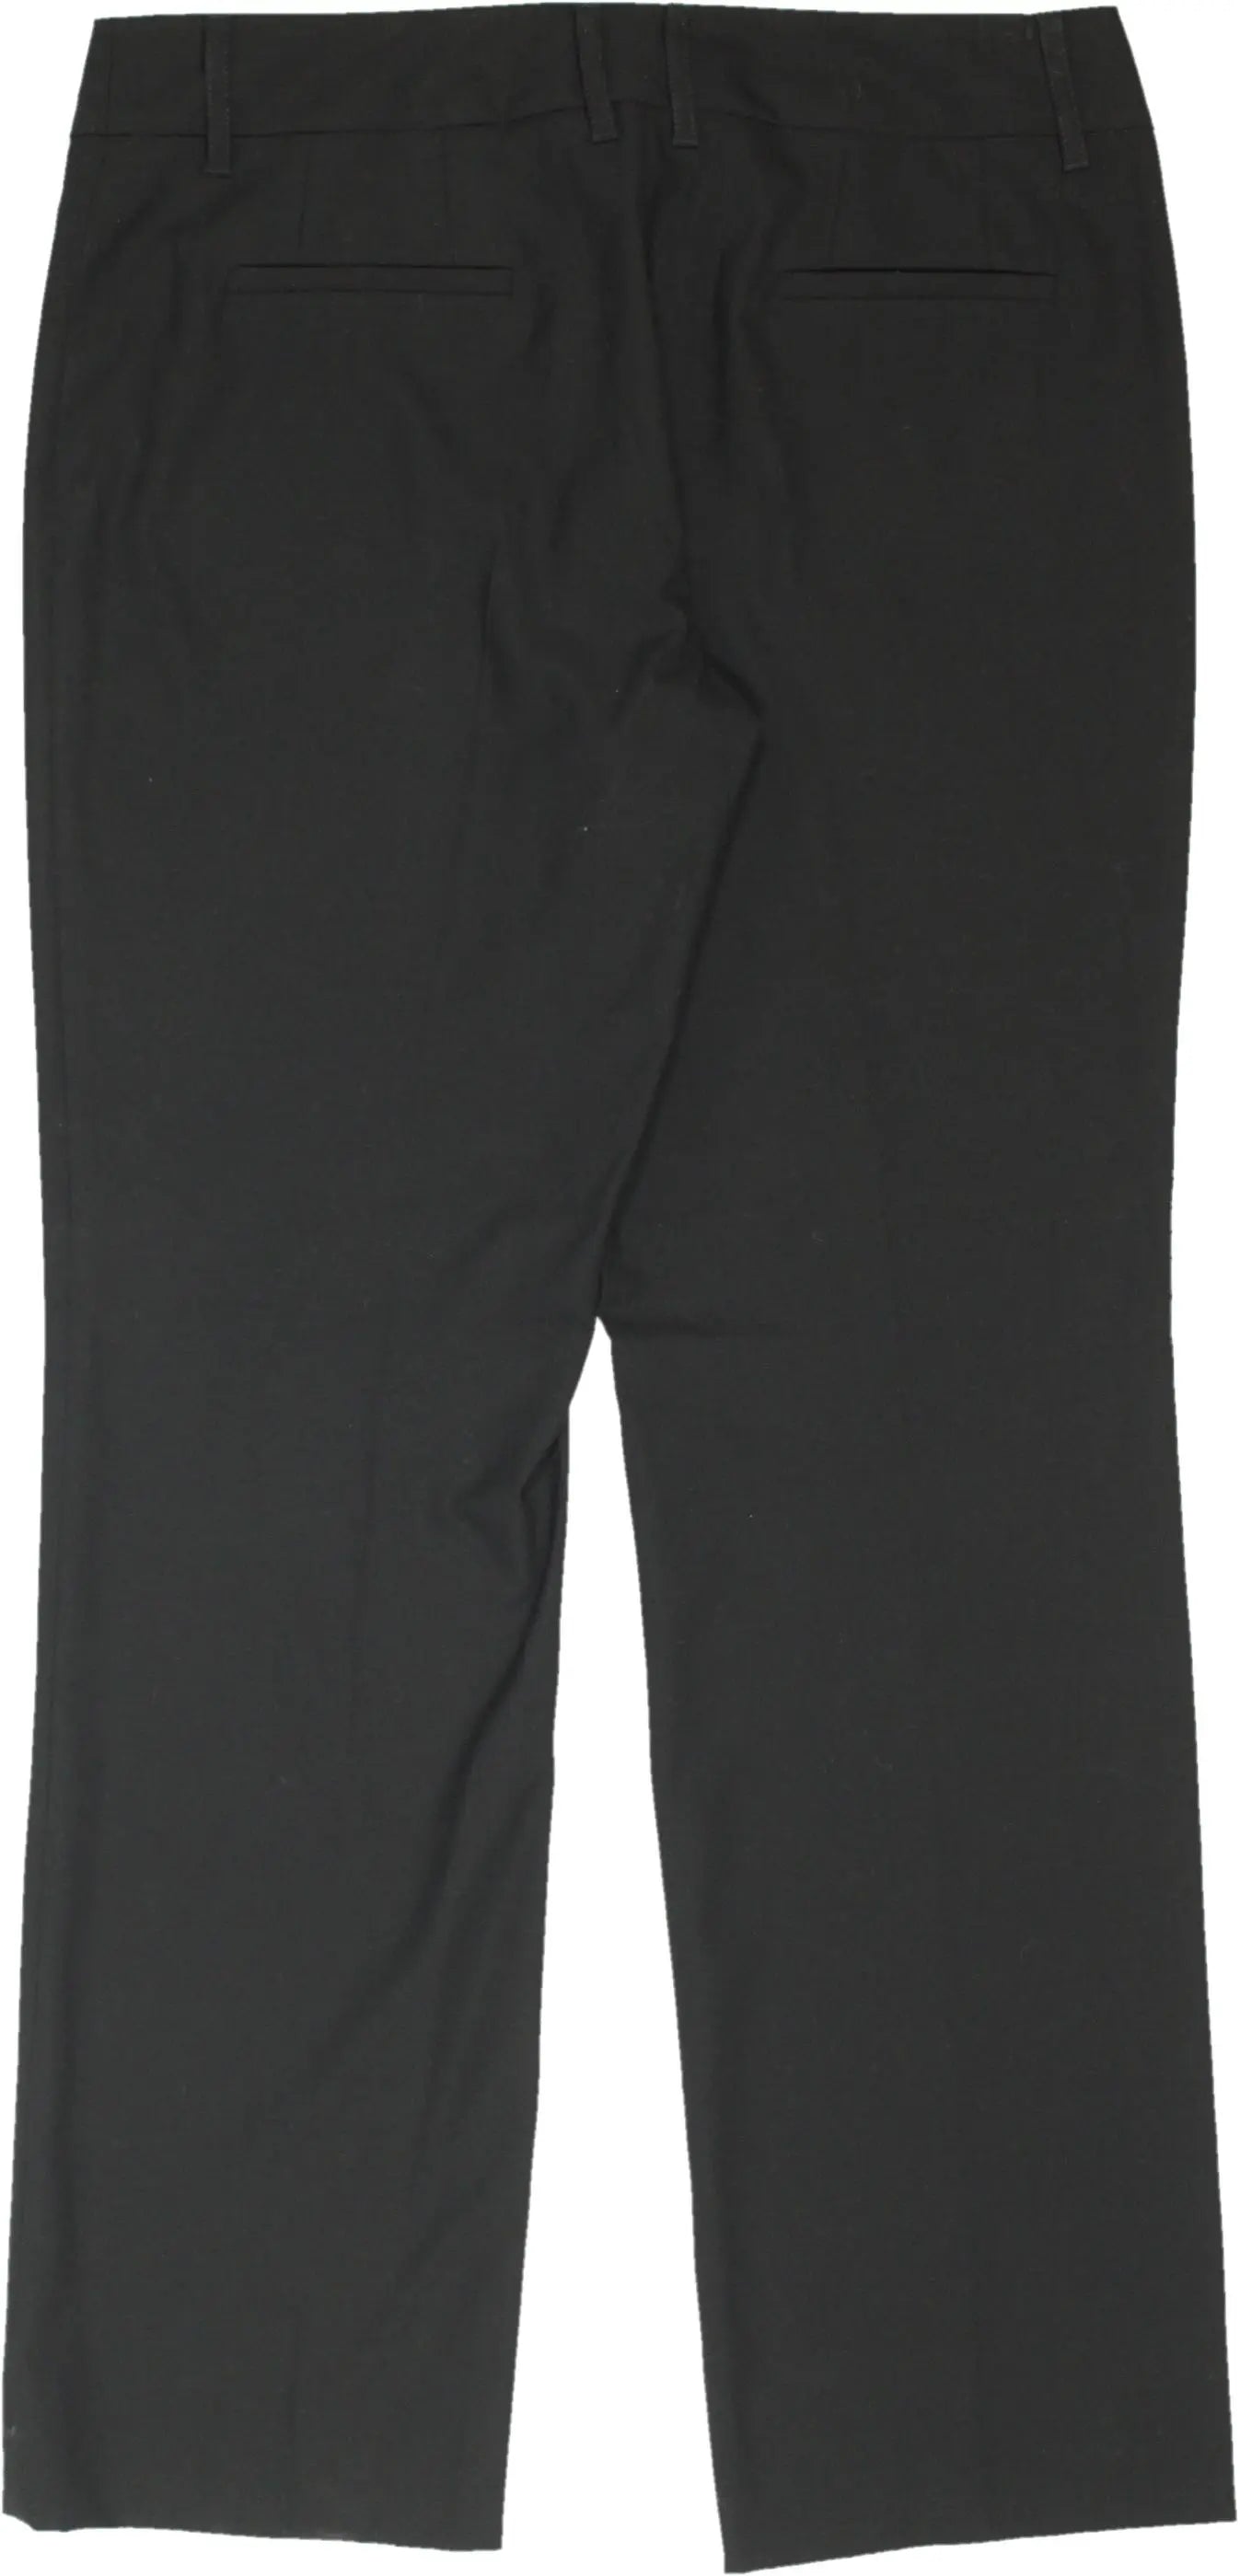 Esprit - Black Pants- ThriftTale.com - Vintage and second handclothing